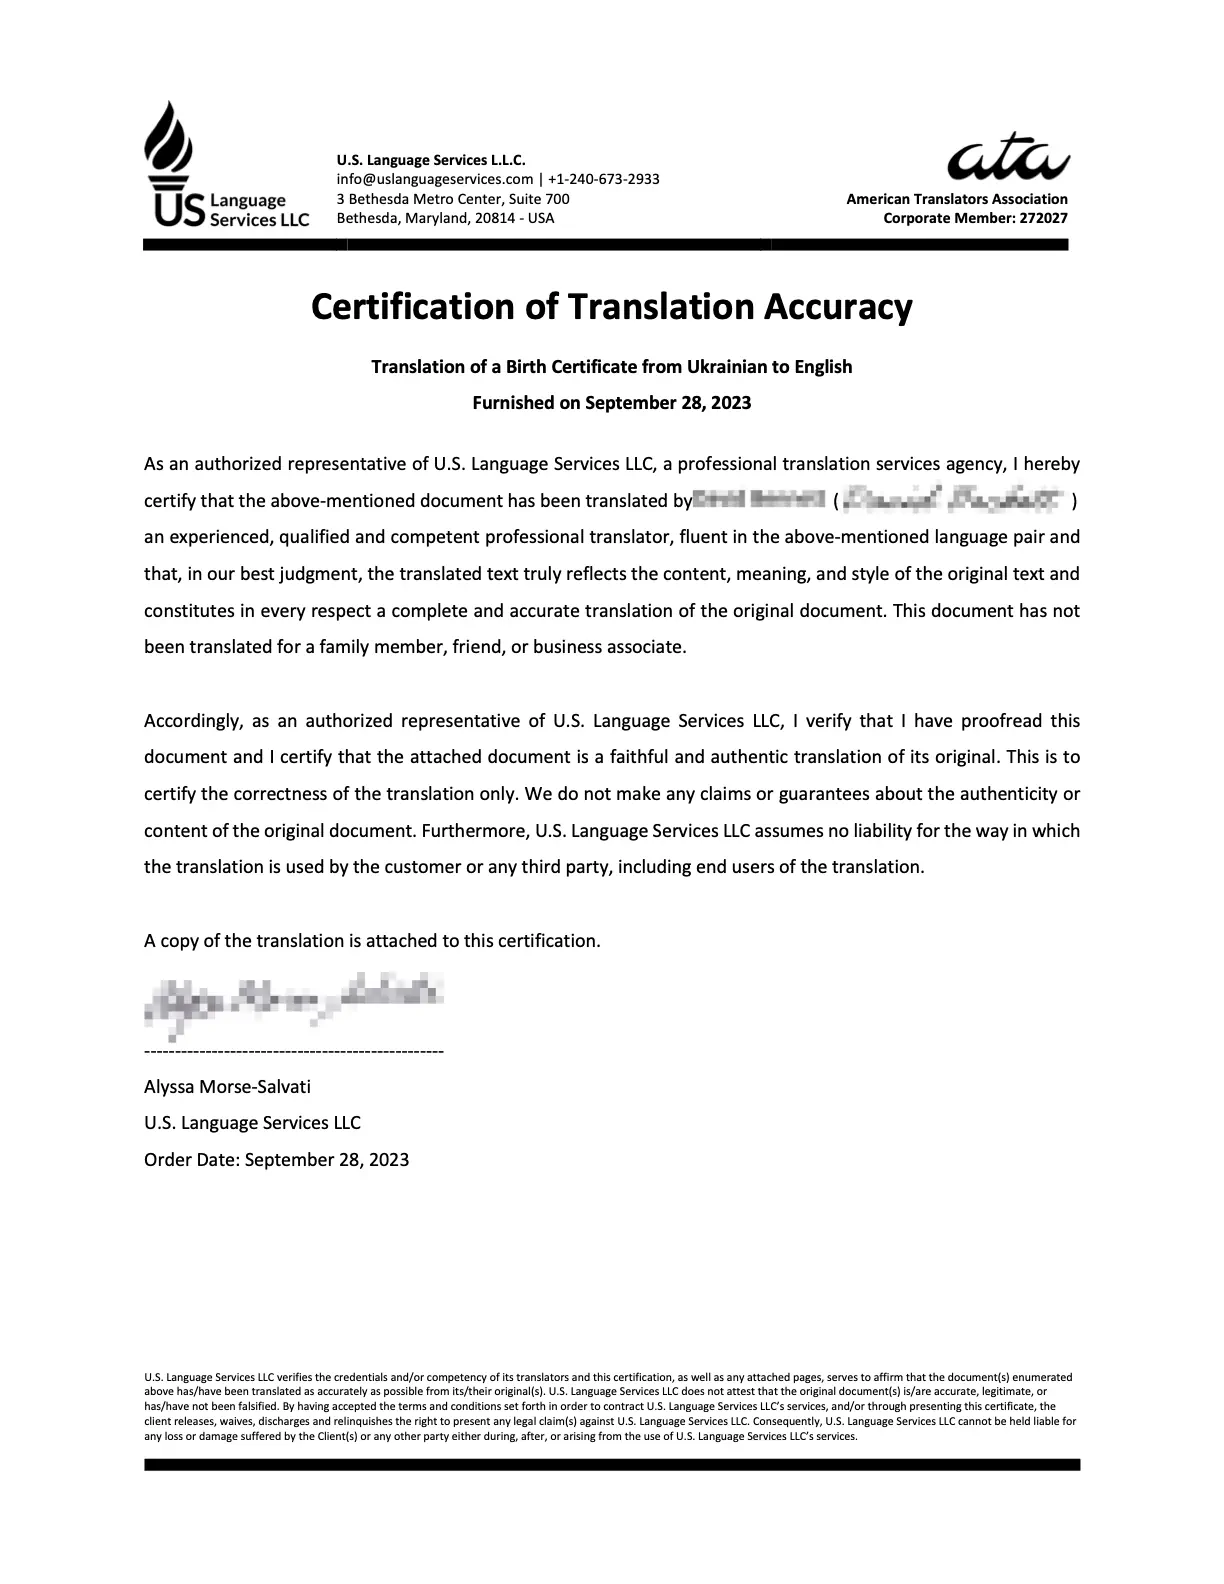 Certified Ukrainian to English translation - Certificate Sample